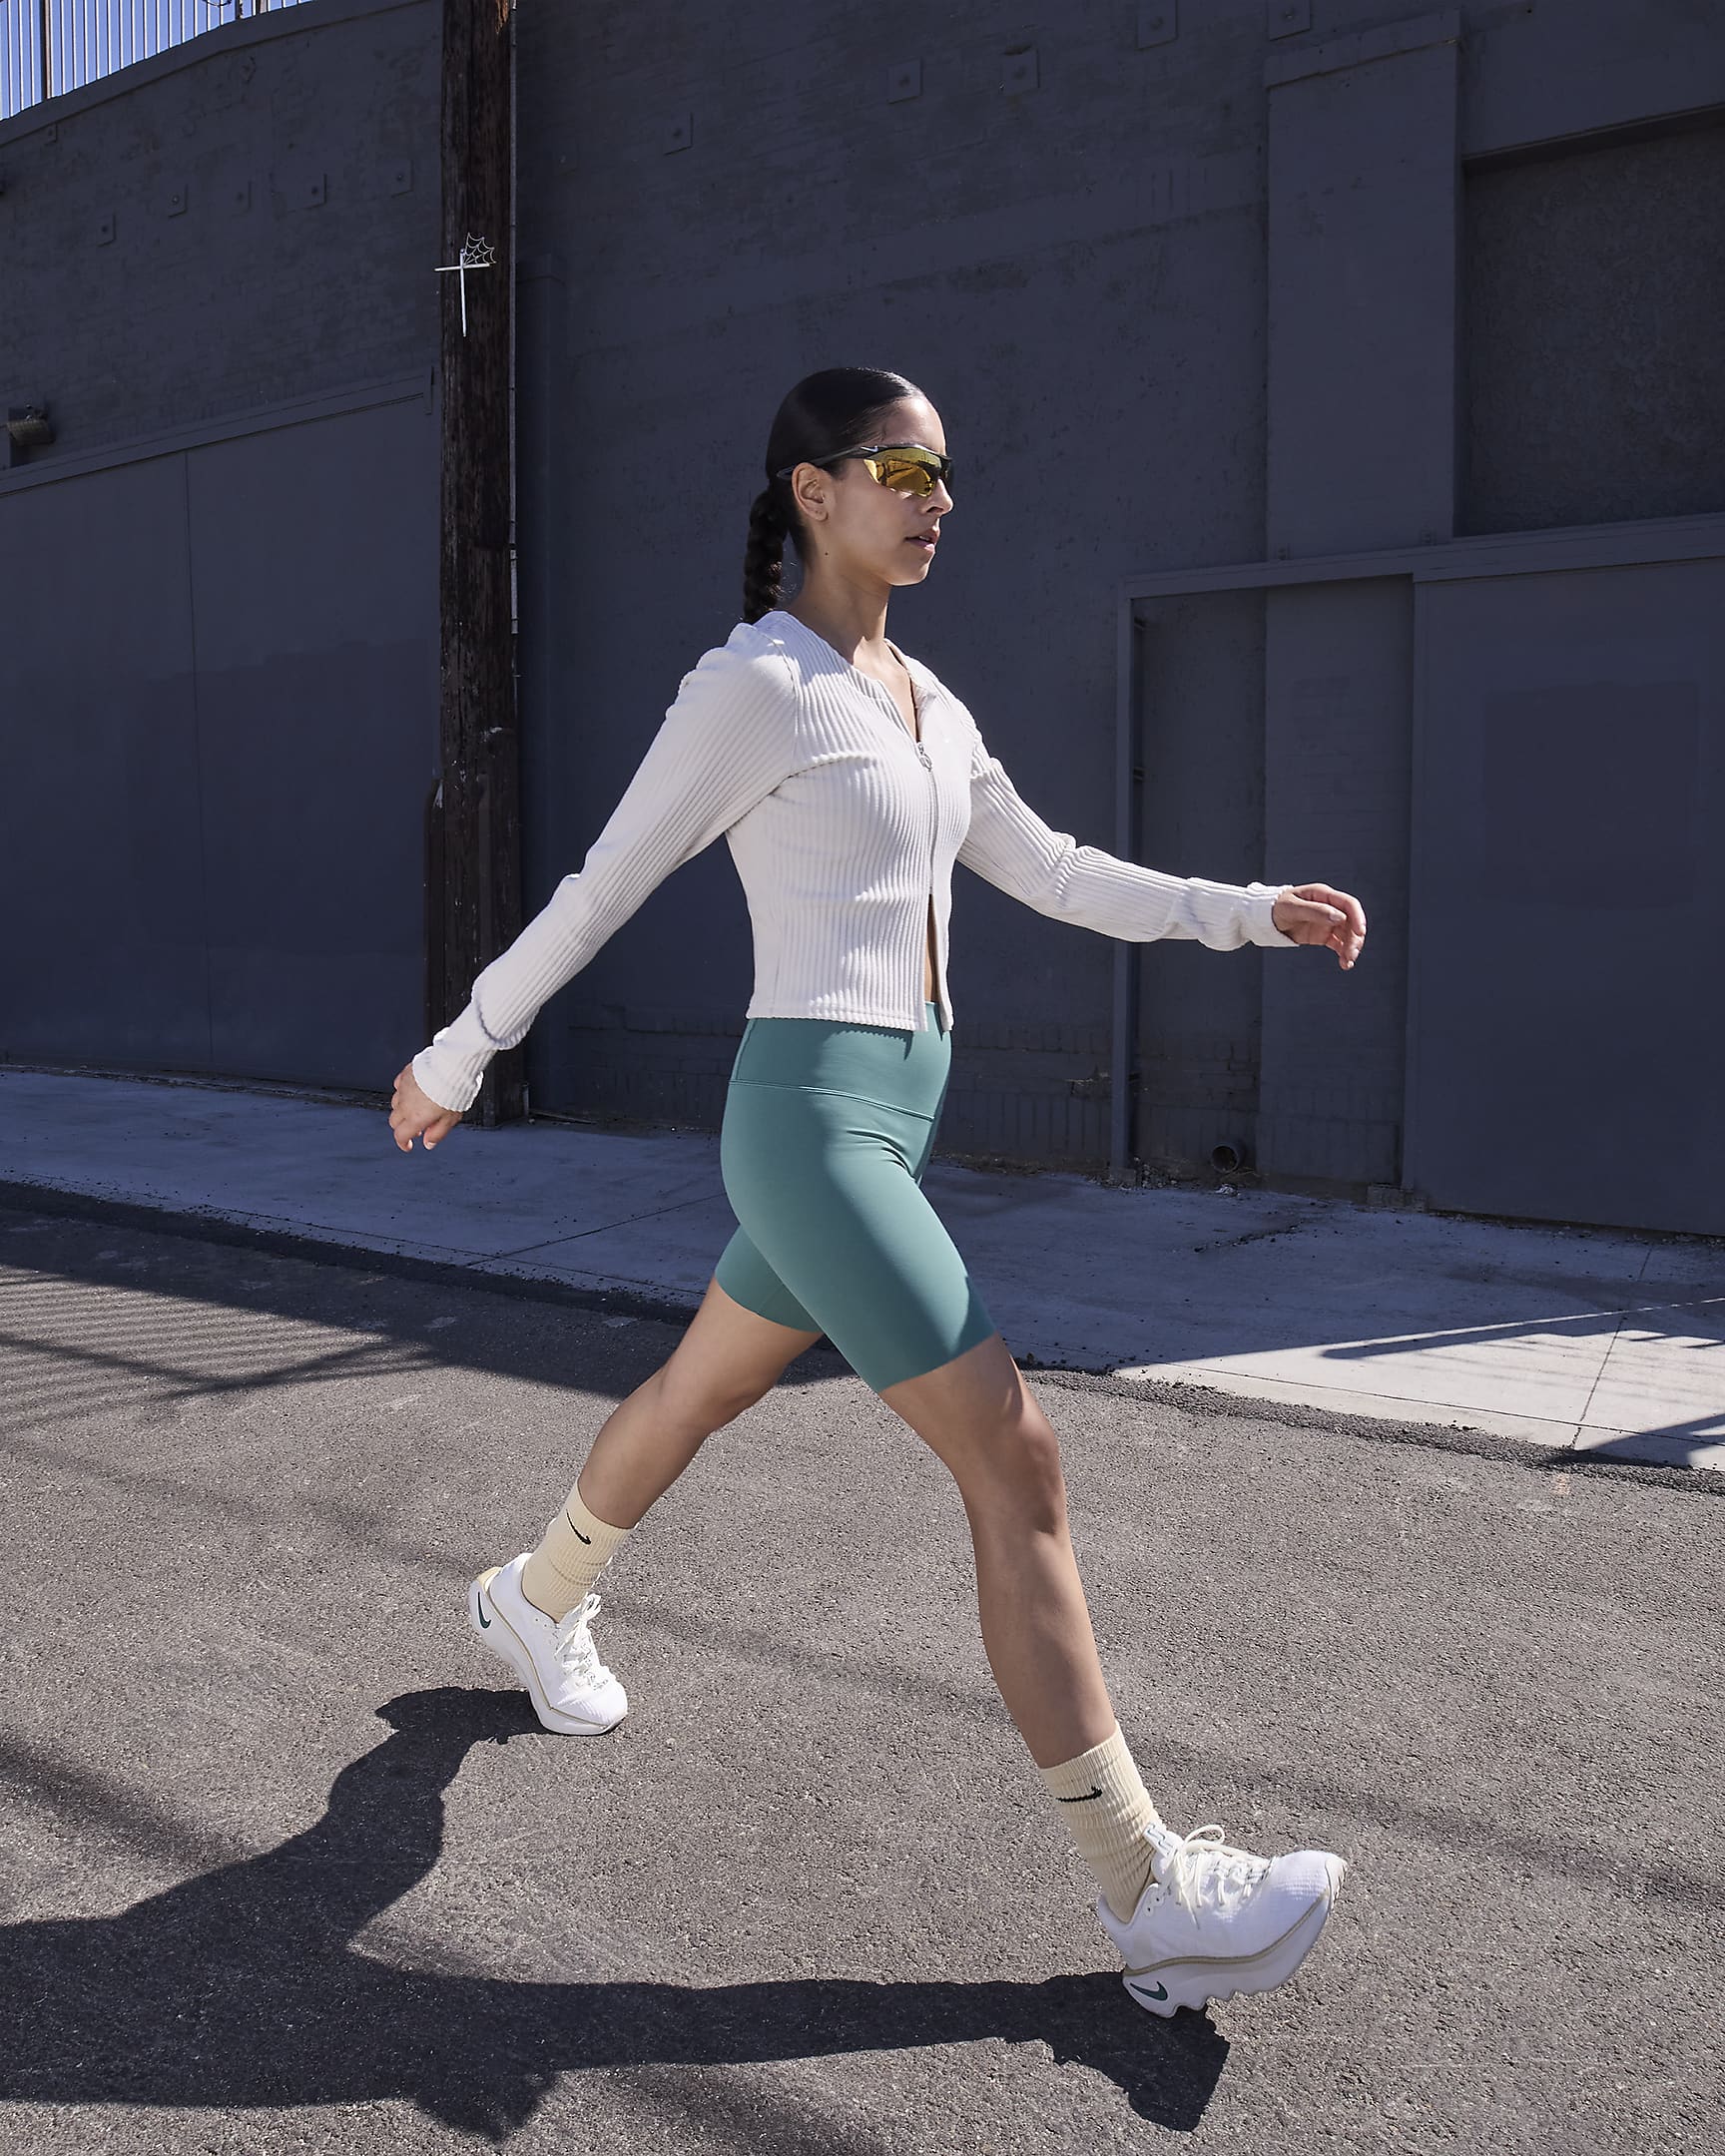 Nike Motiva Women's Walking Shoes - Sail/White/Phantom/Sail